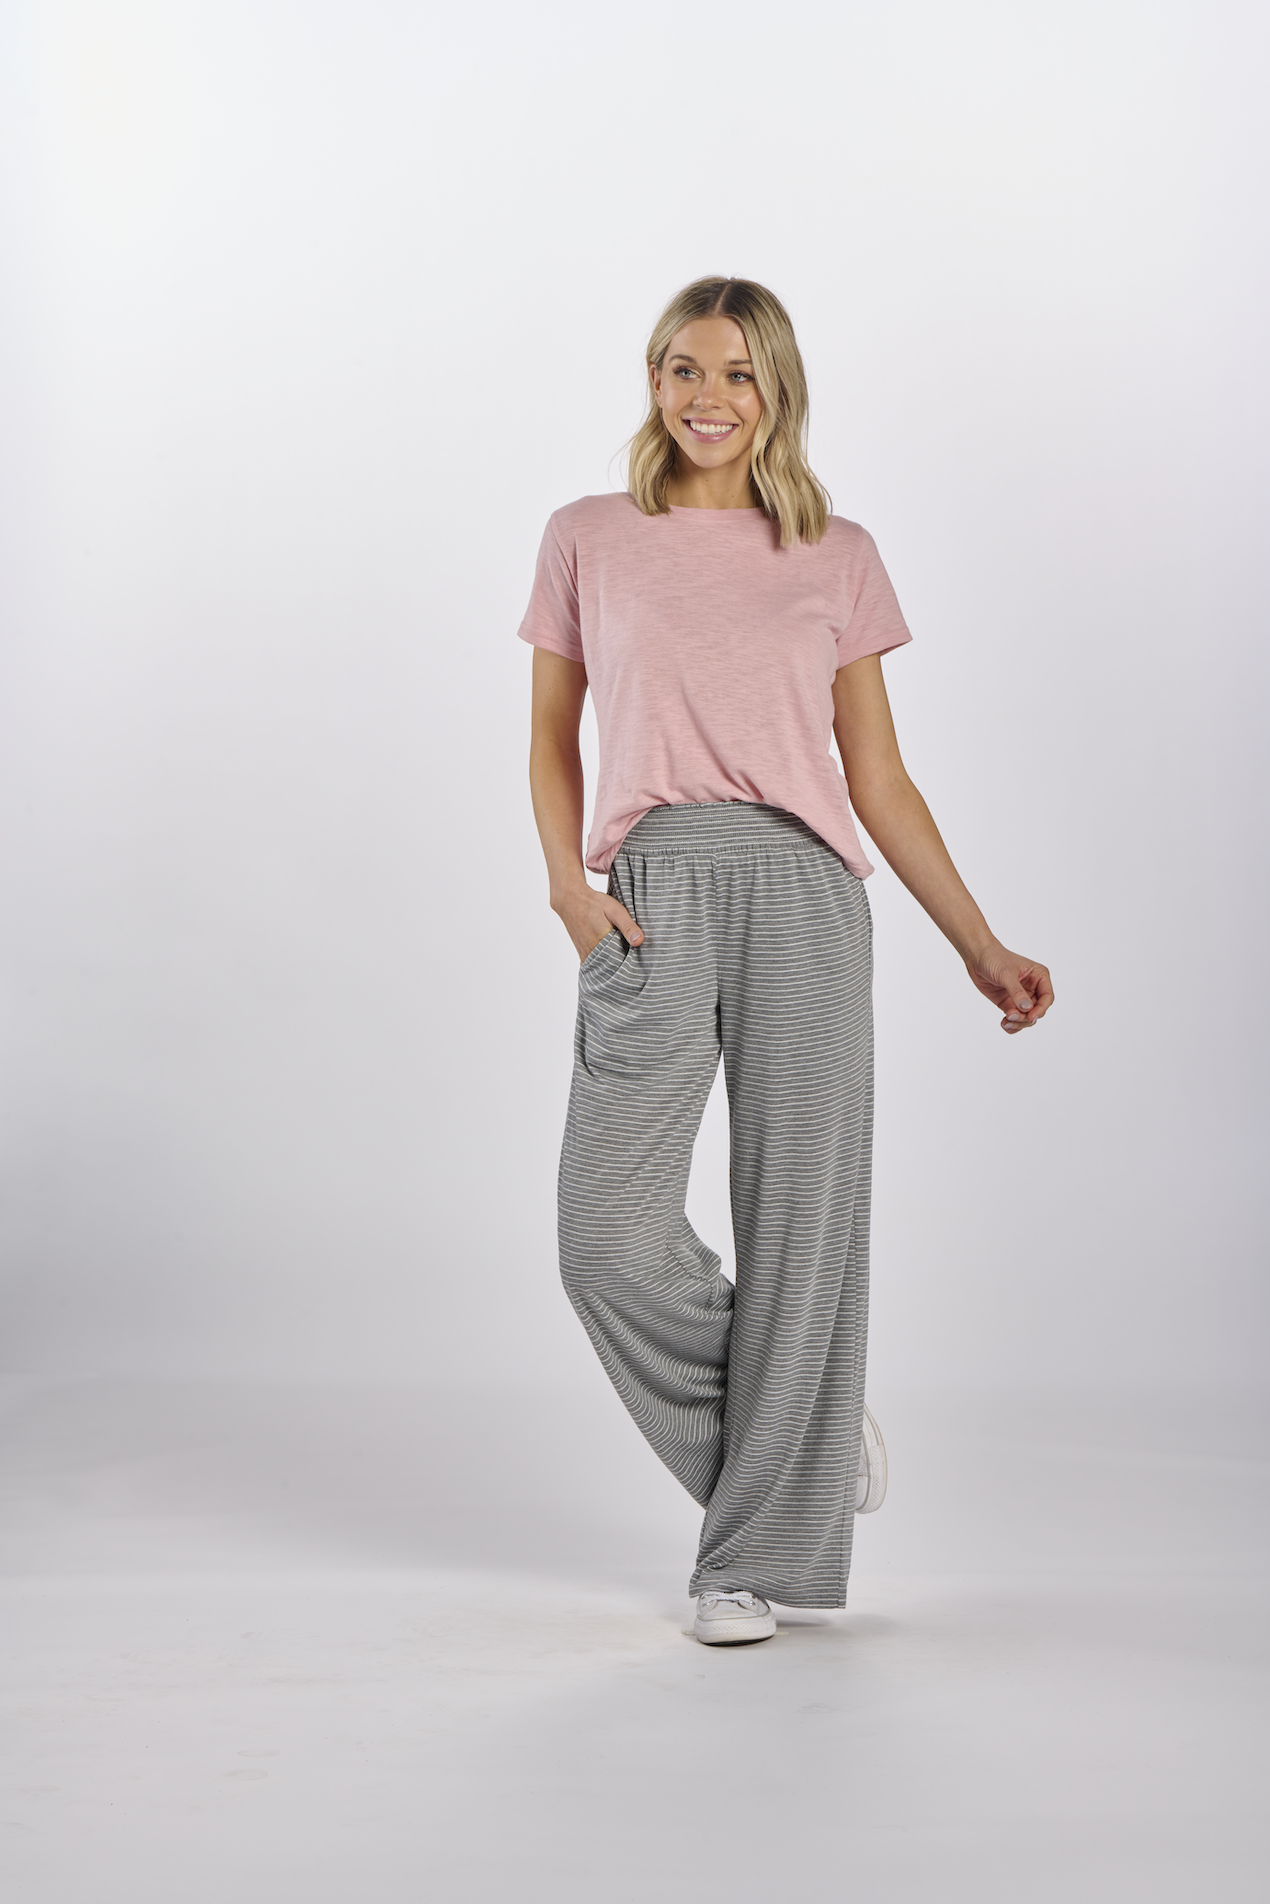 Femofit 2 Pack Womans Comfy Pajama Pants Lounge Pant Soft Cotton Bottoms Wide Leg Drawstring Flannel Sleepwear for Ladies S-XL 